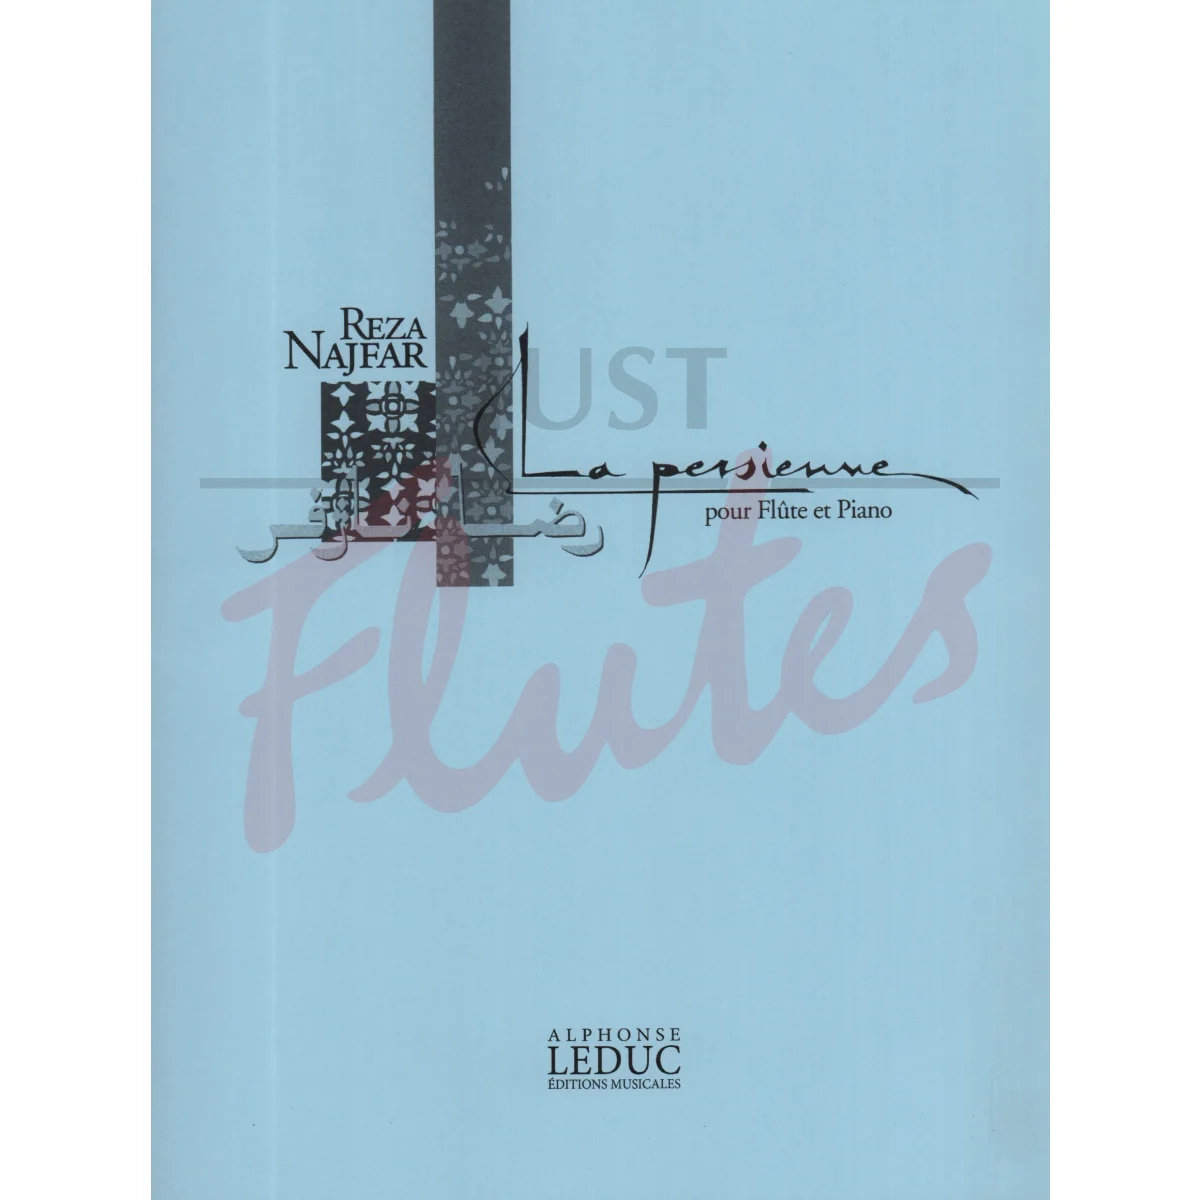 La Persienne for Flute and Piano